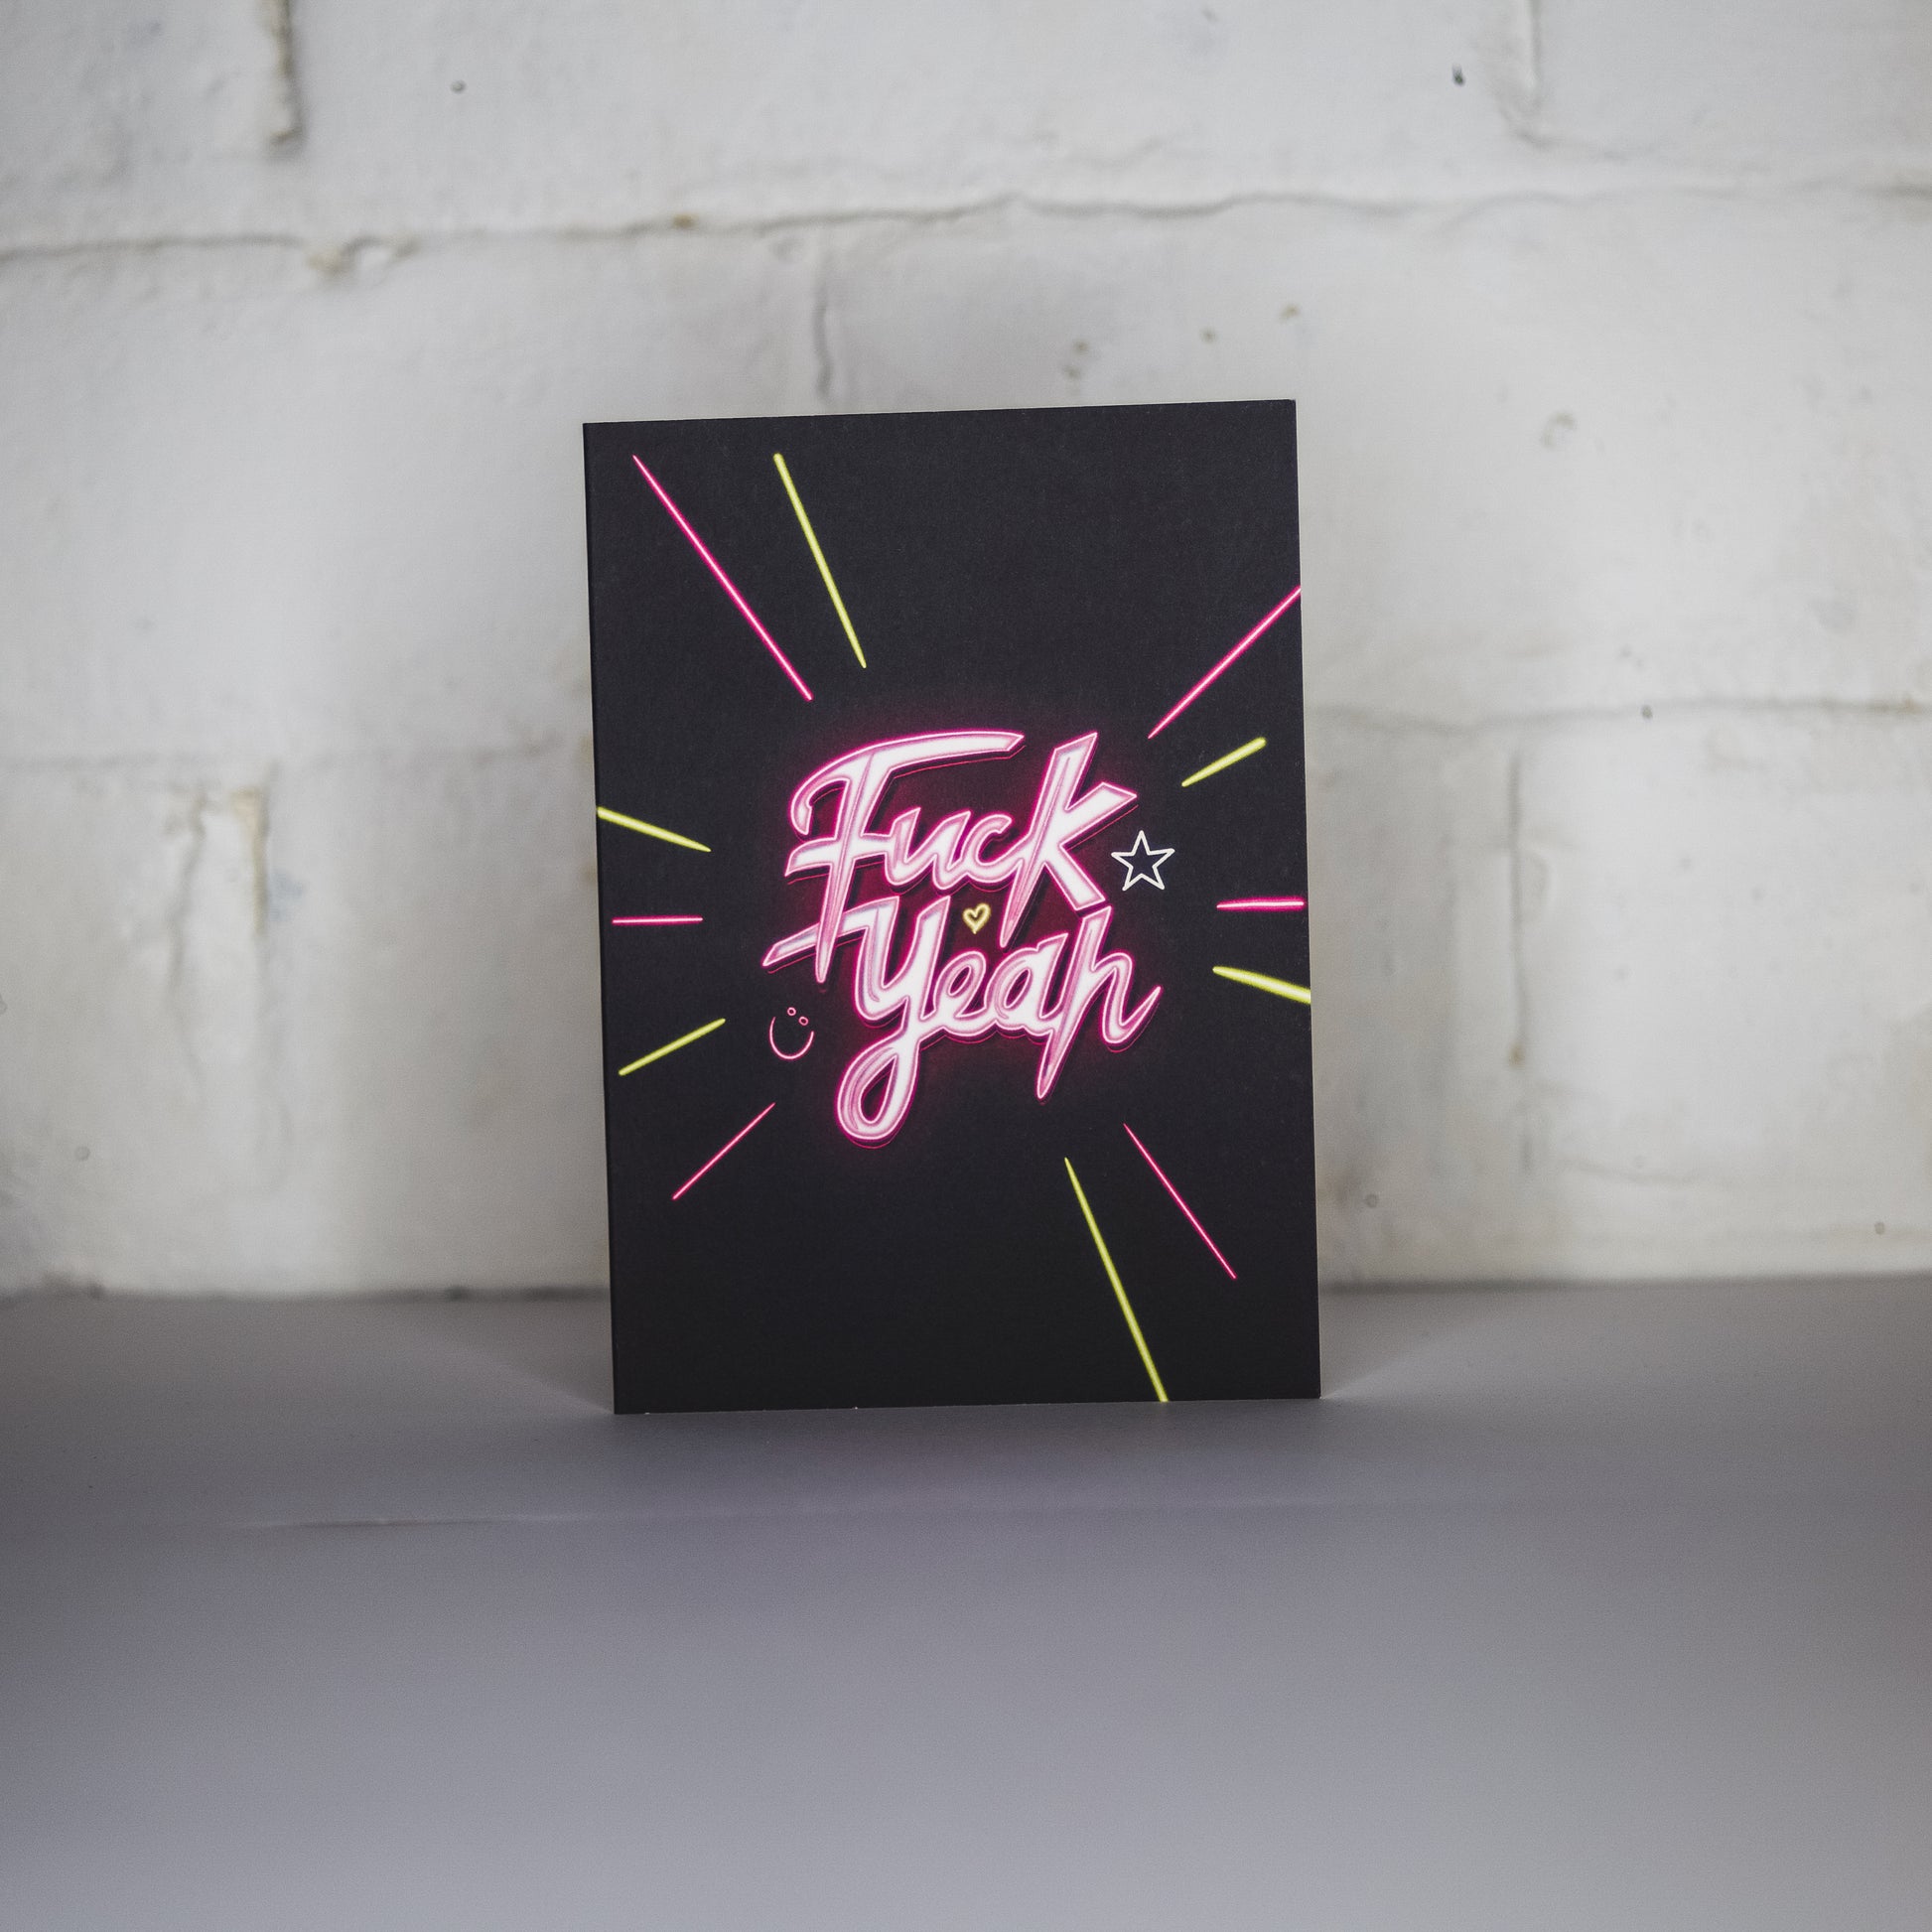 Greetings Card with Pink Neon Fuck Yeah Writing by Wayward